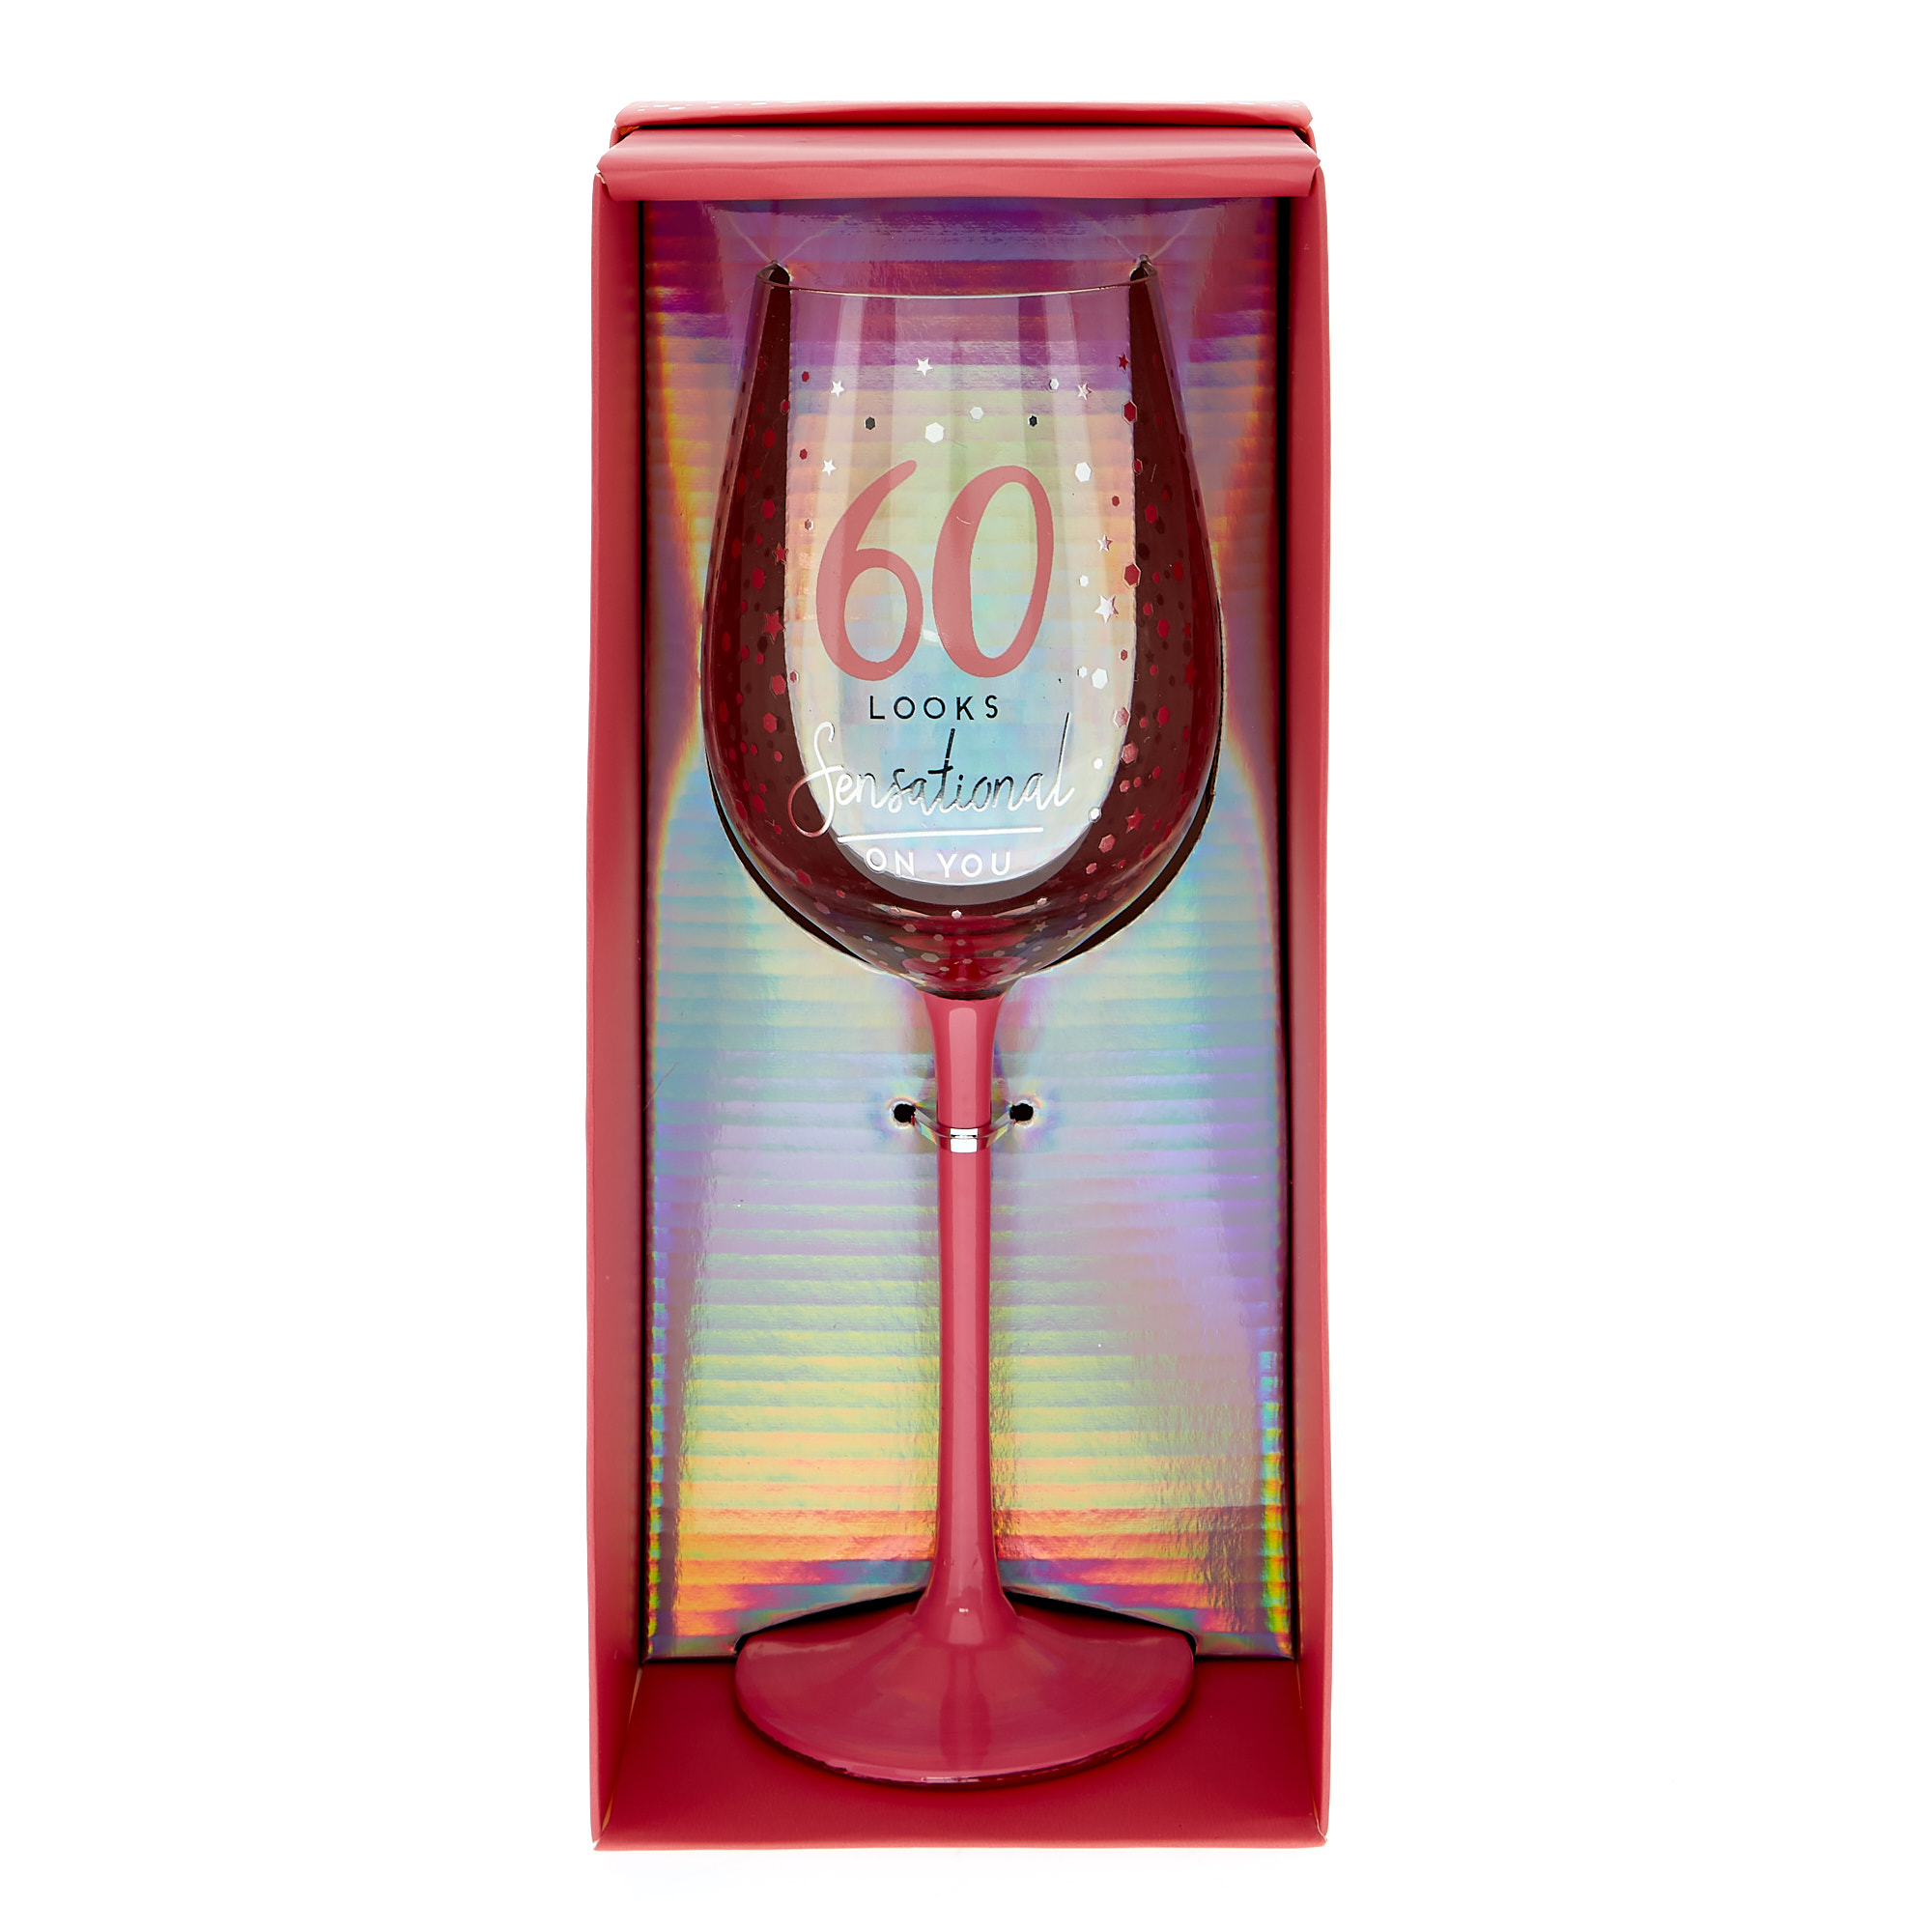 60 Looks Sensational On You Wine Glass